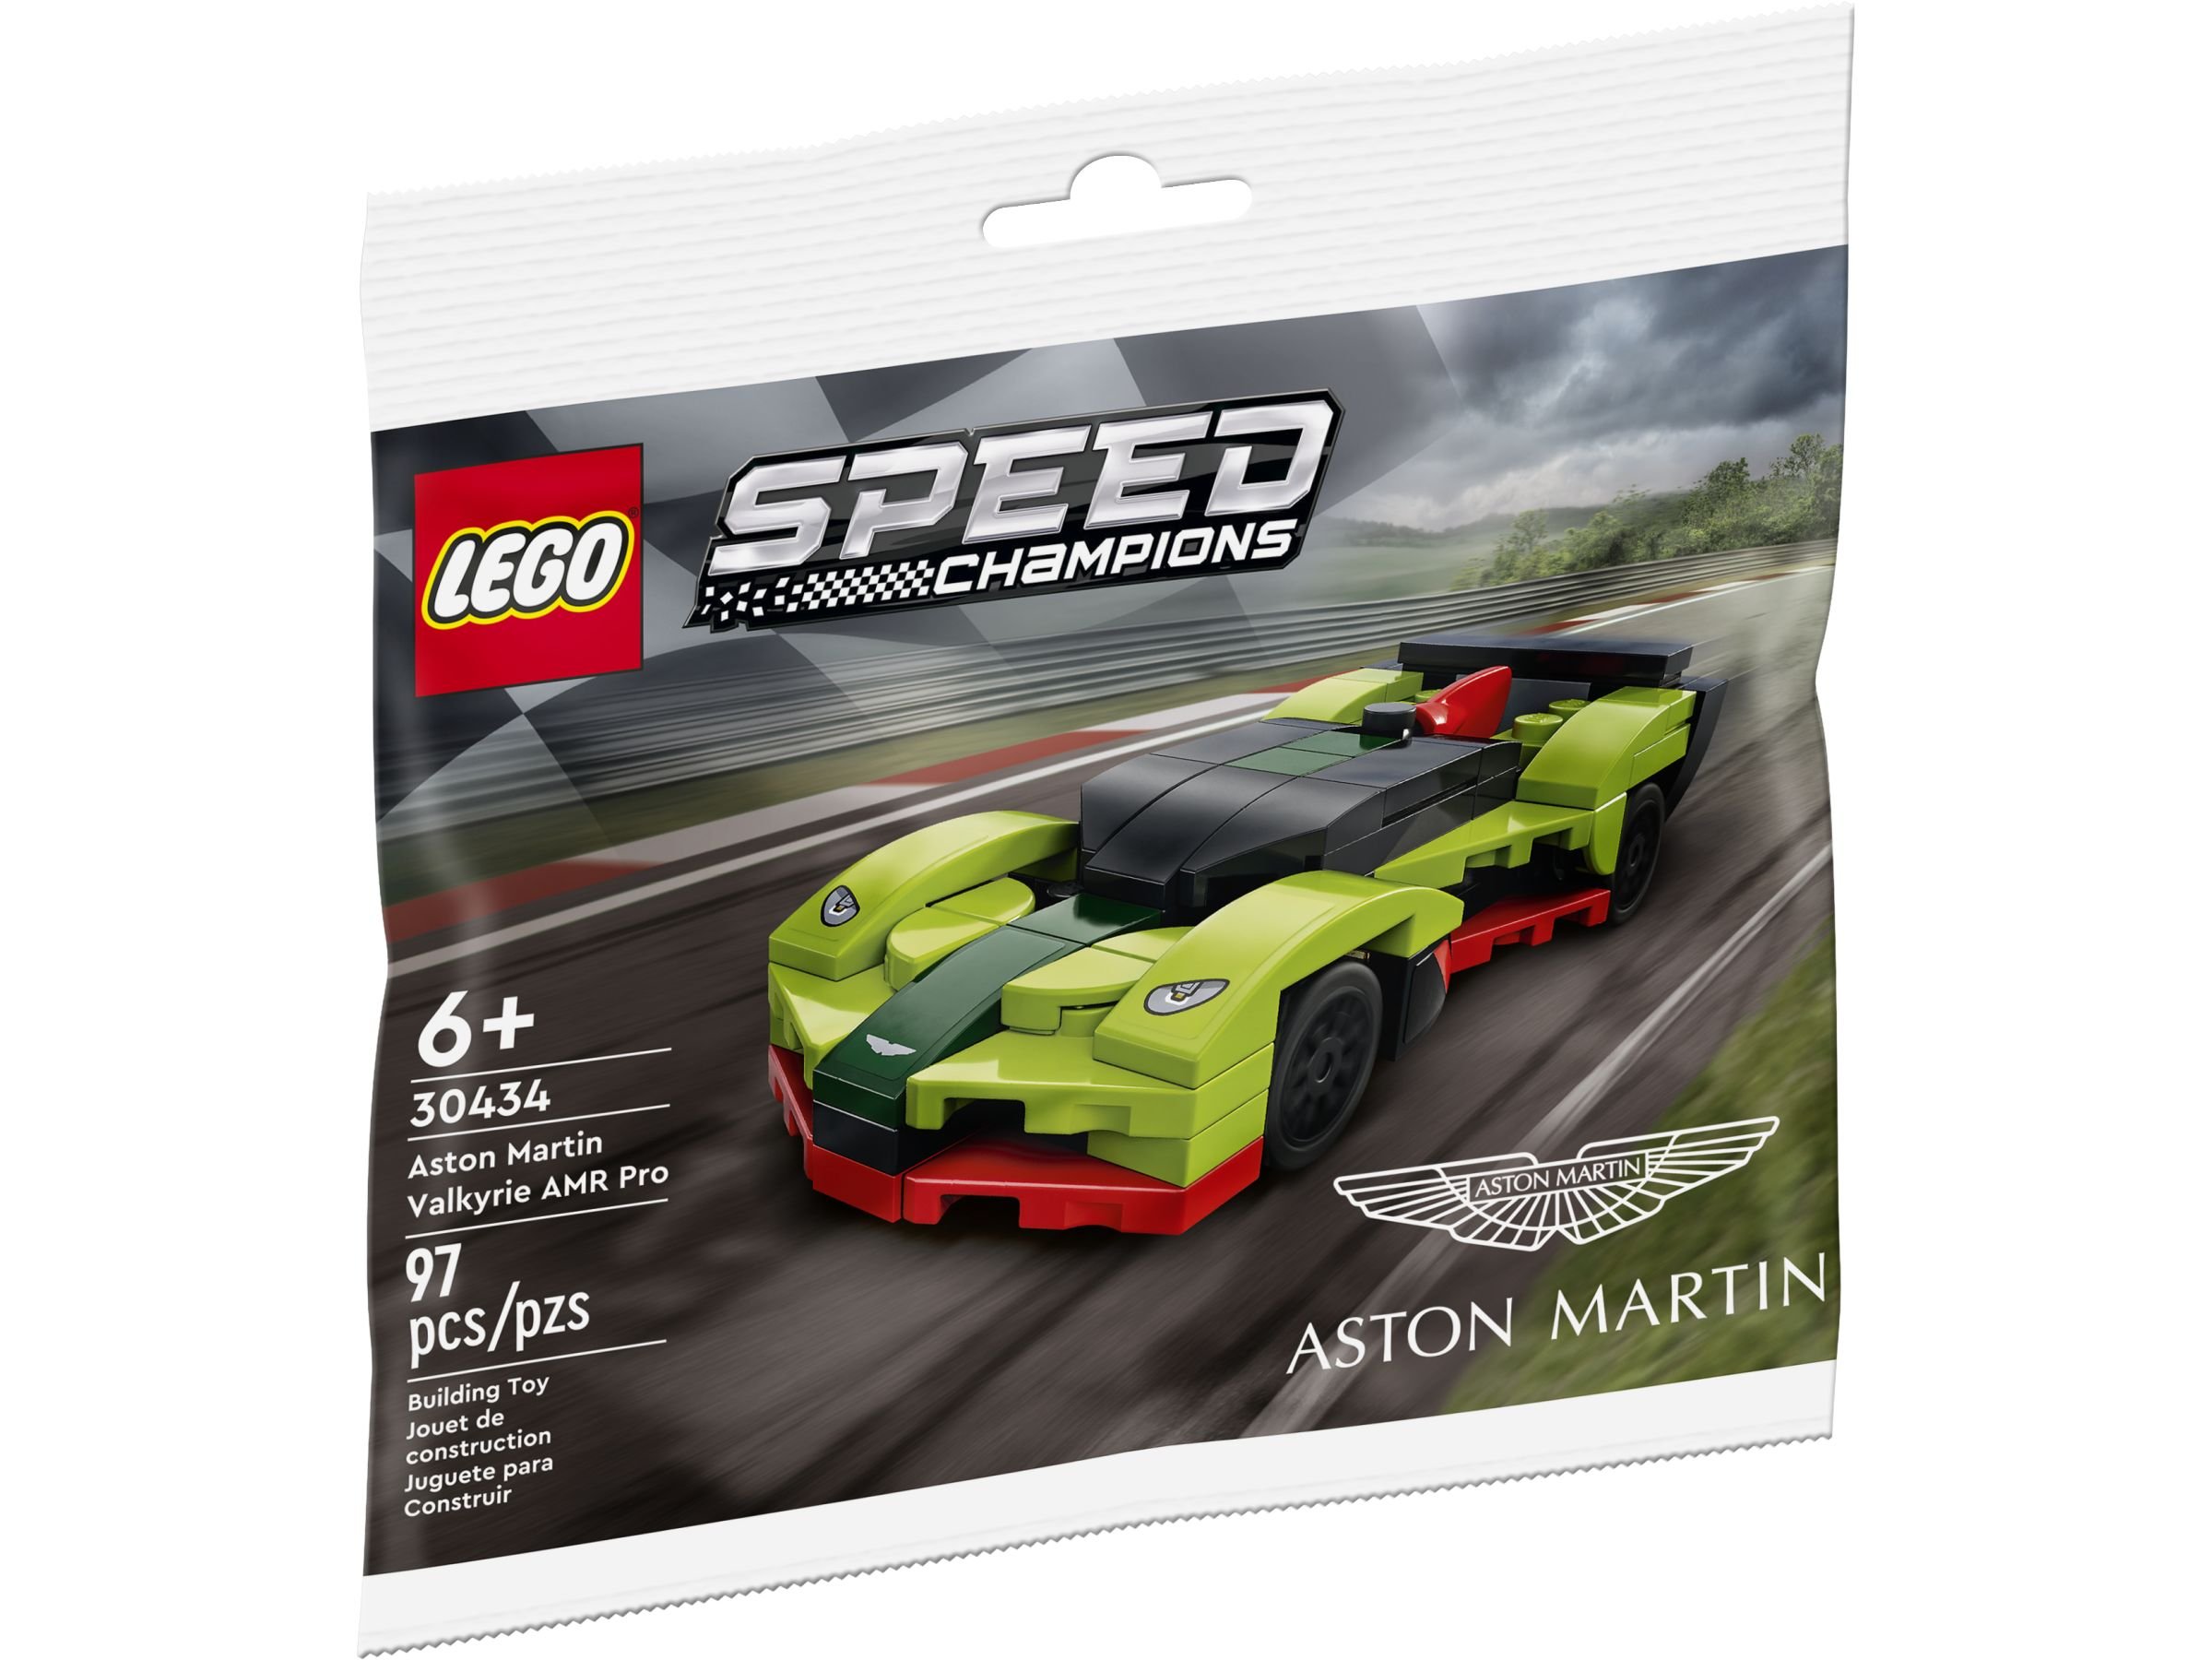 LEGO Speed Champions 30434 Aston Martin Valkyrie AMR Pro LEGO_30434_alt1.jpg